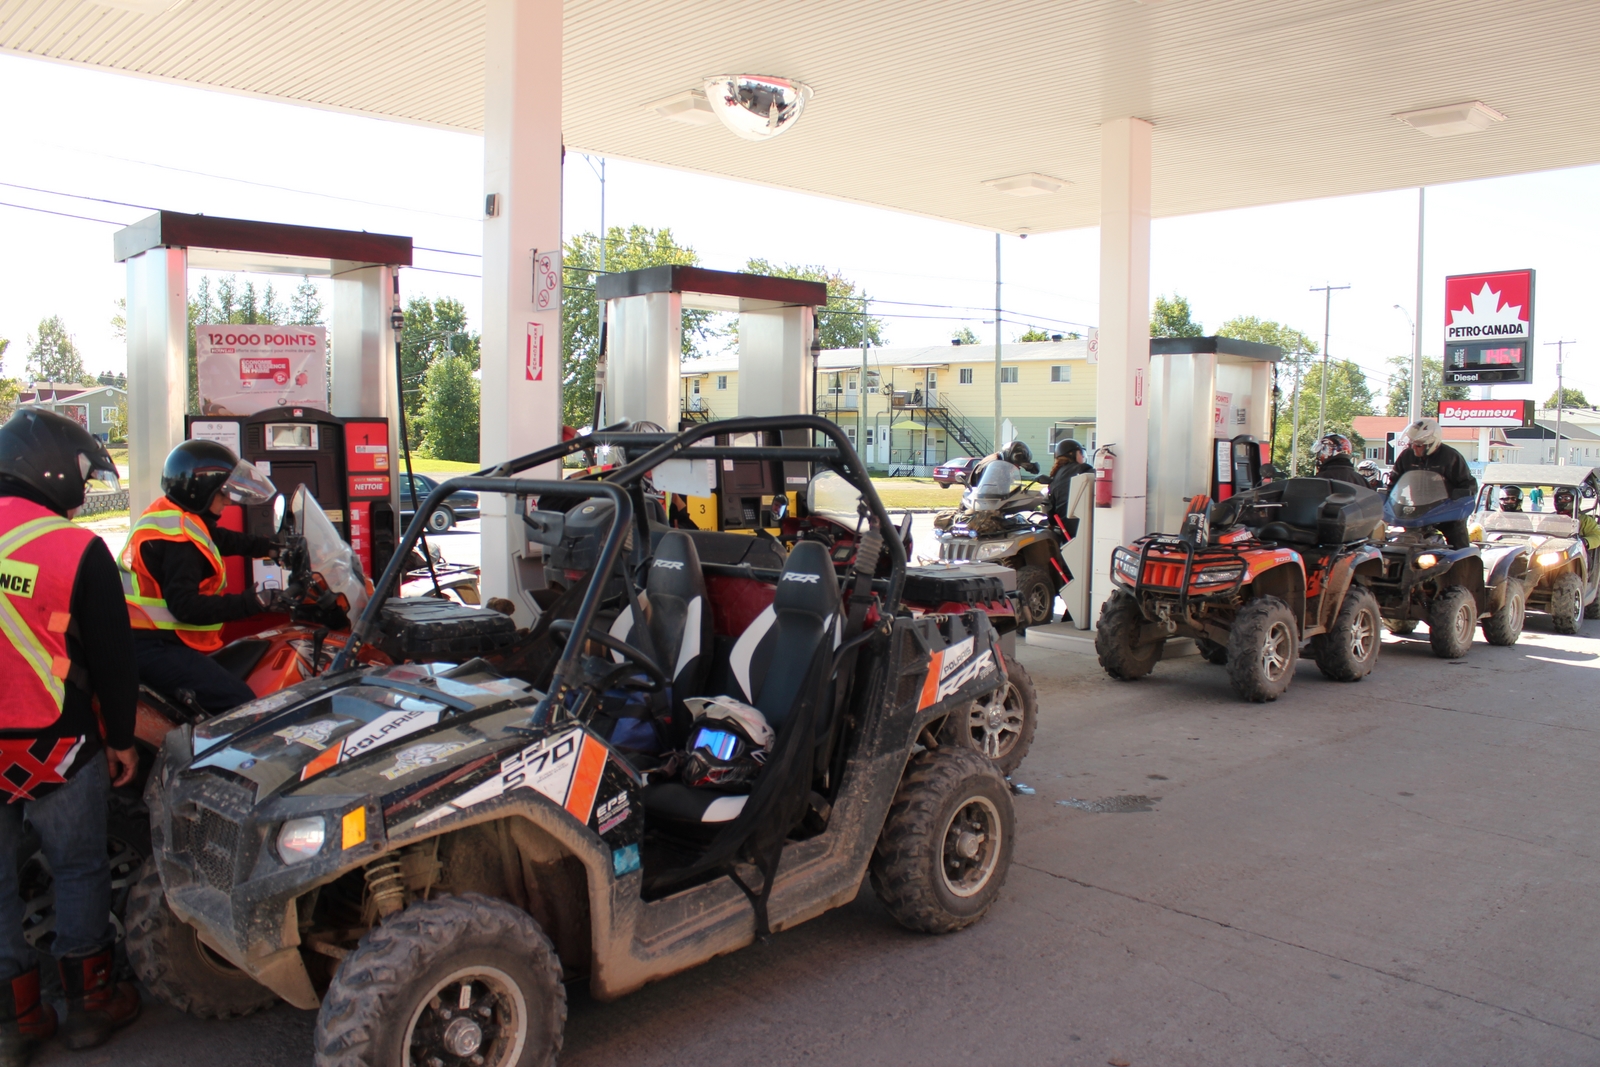 Gas prices and ATV/SxS riding